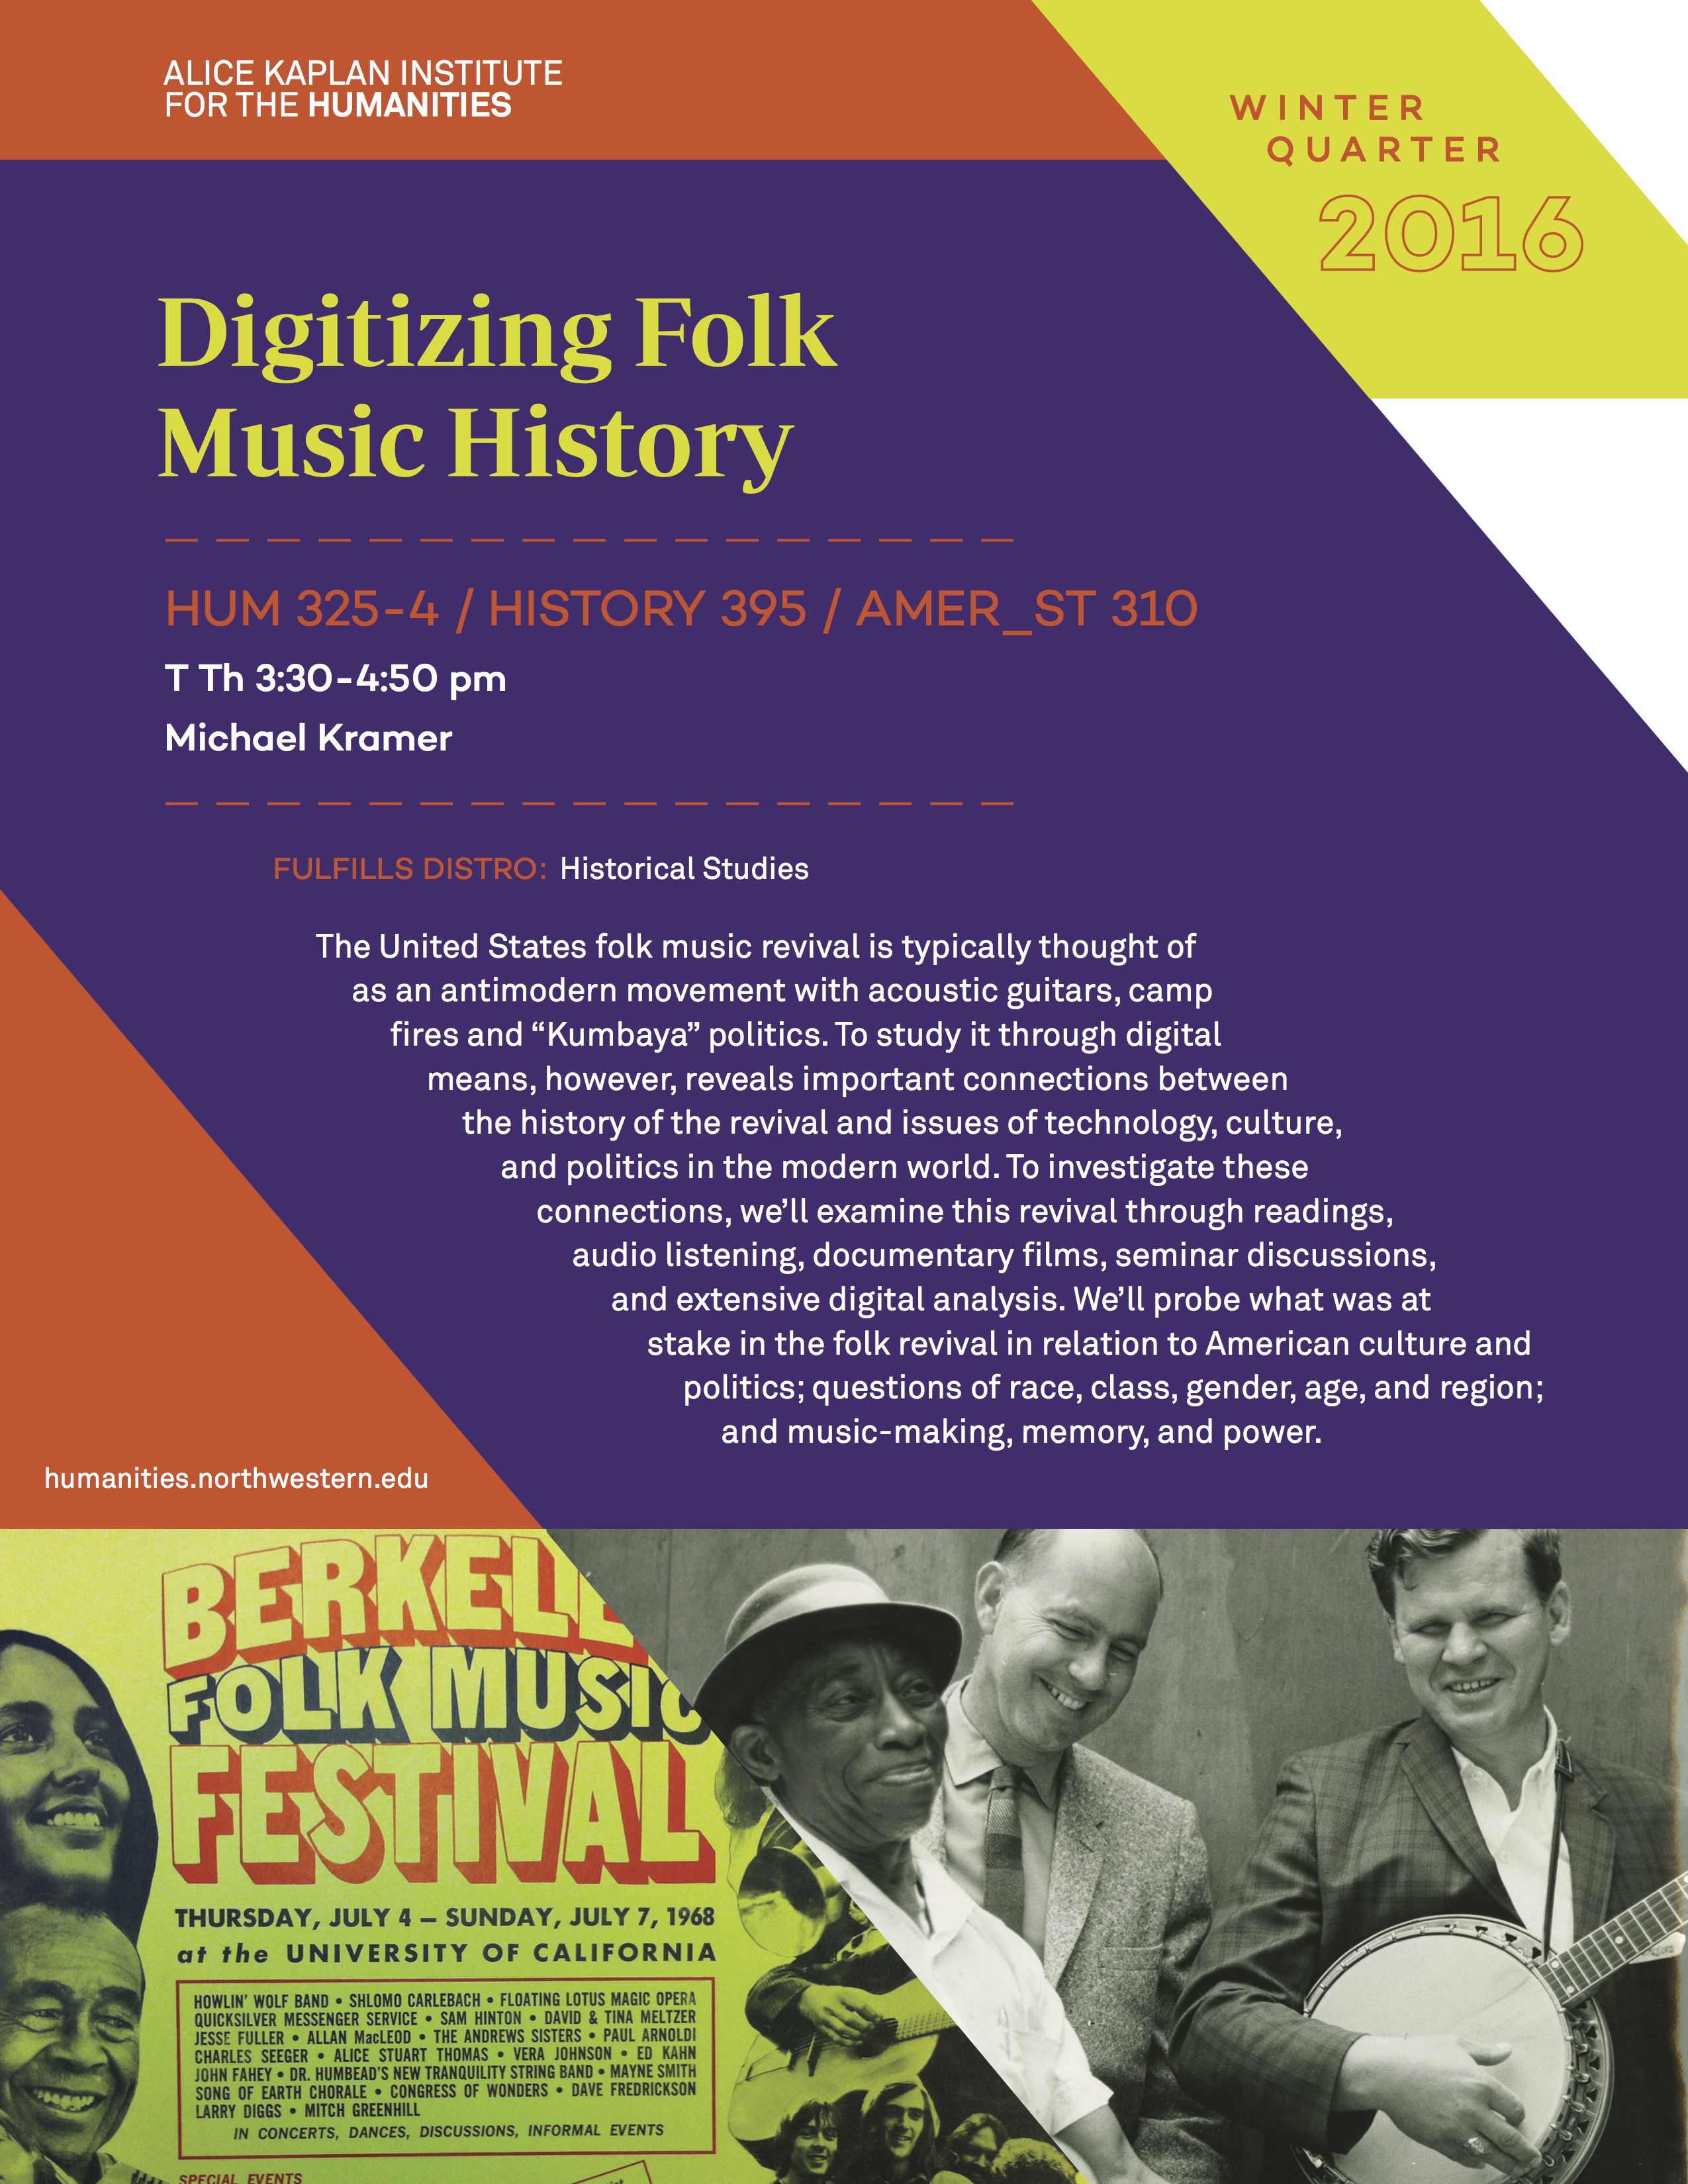 Digitizing Folk Music History_WQ16 course flyer 11_9_15